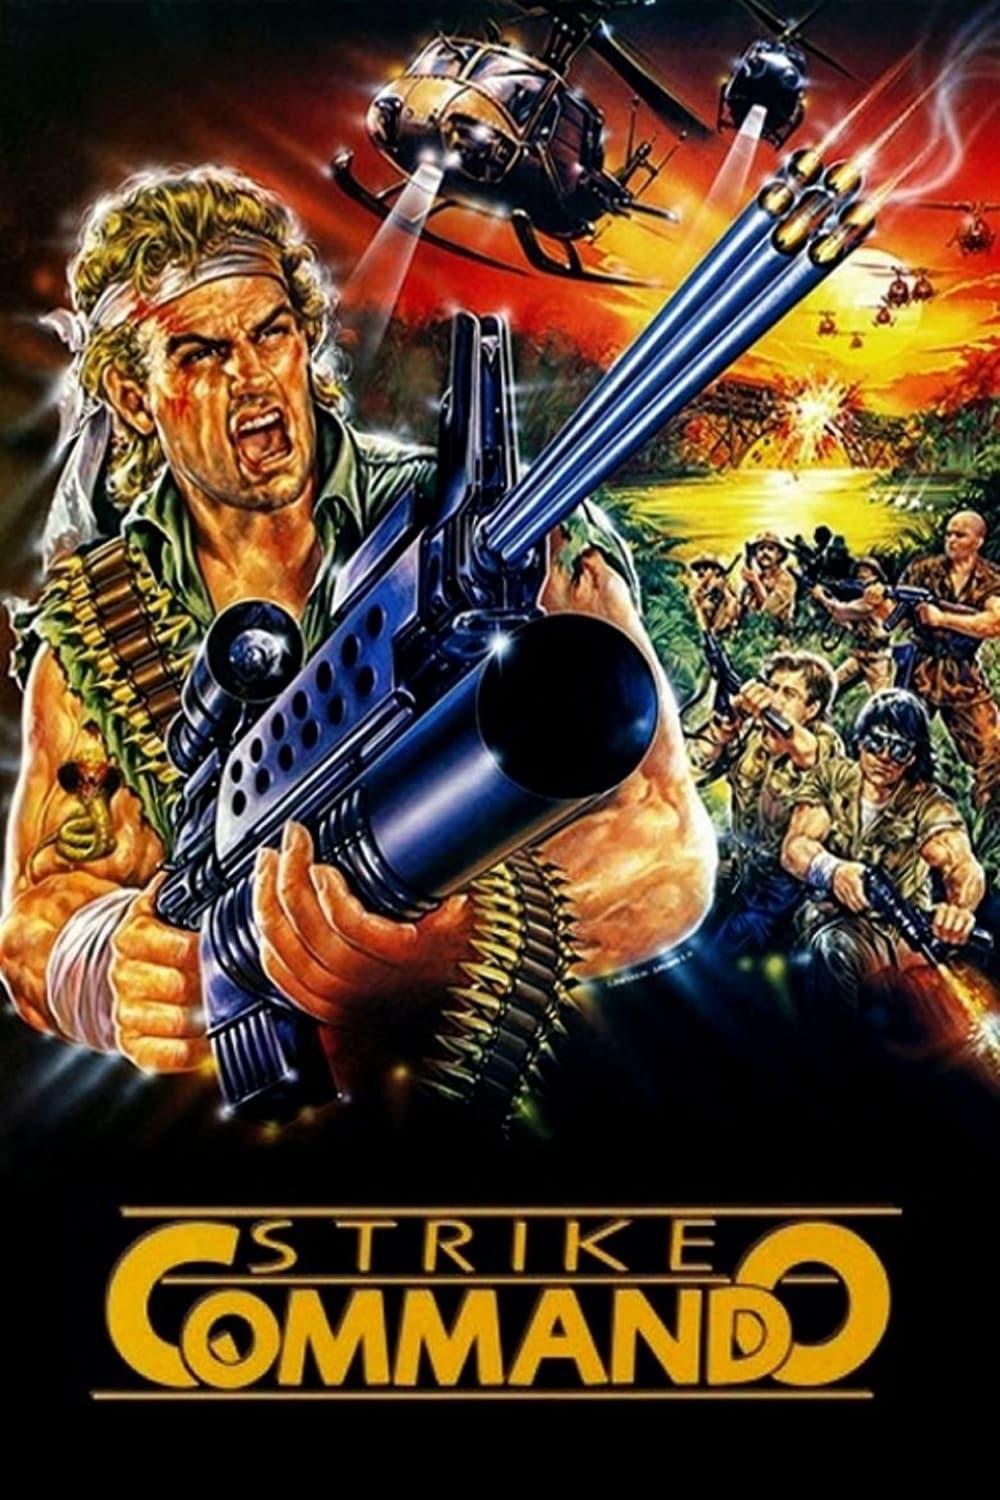 Strike Commando poster